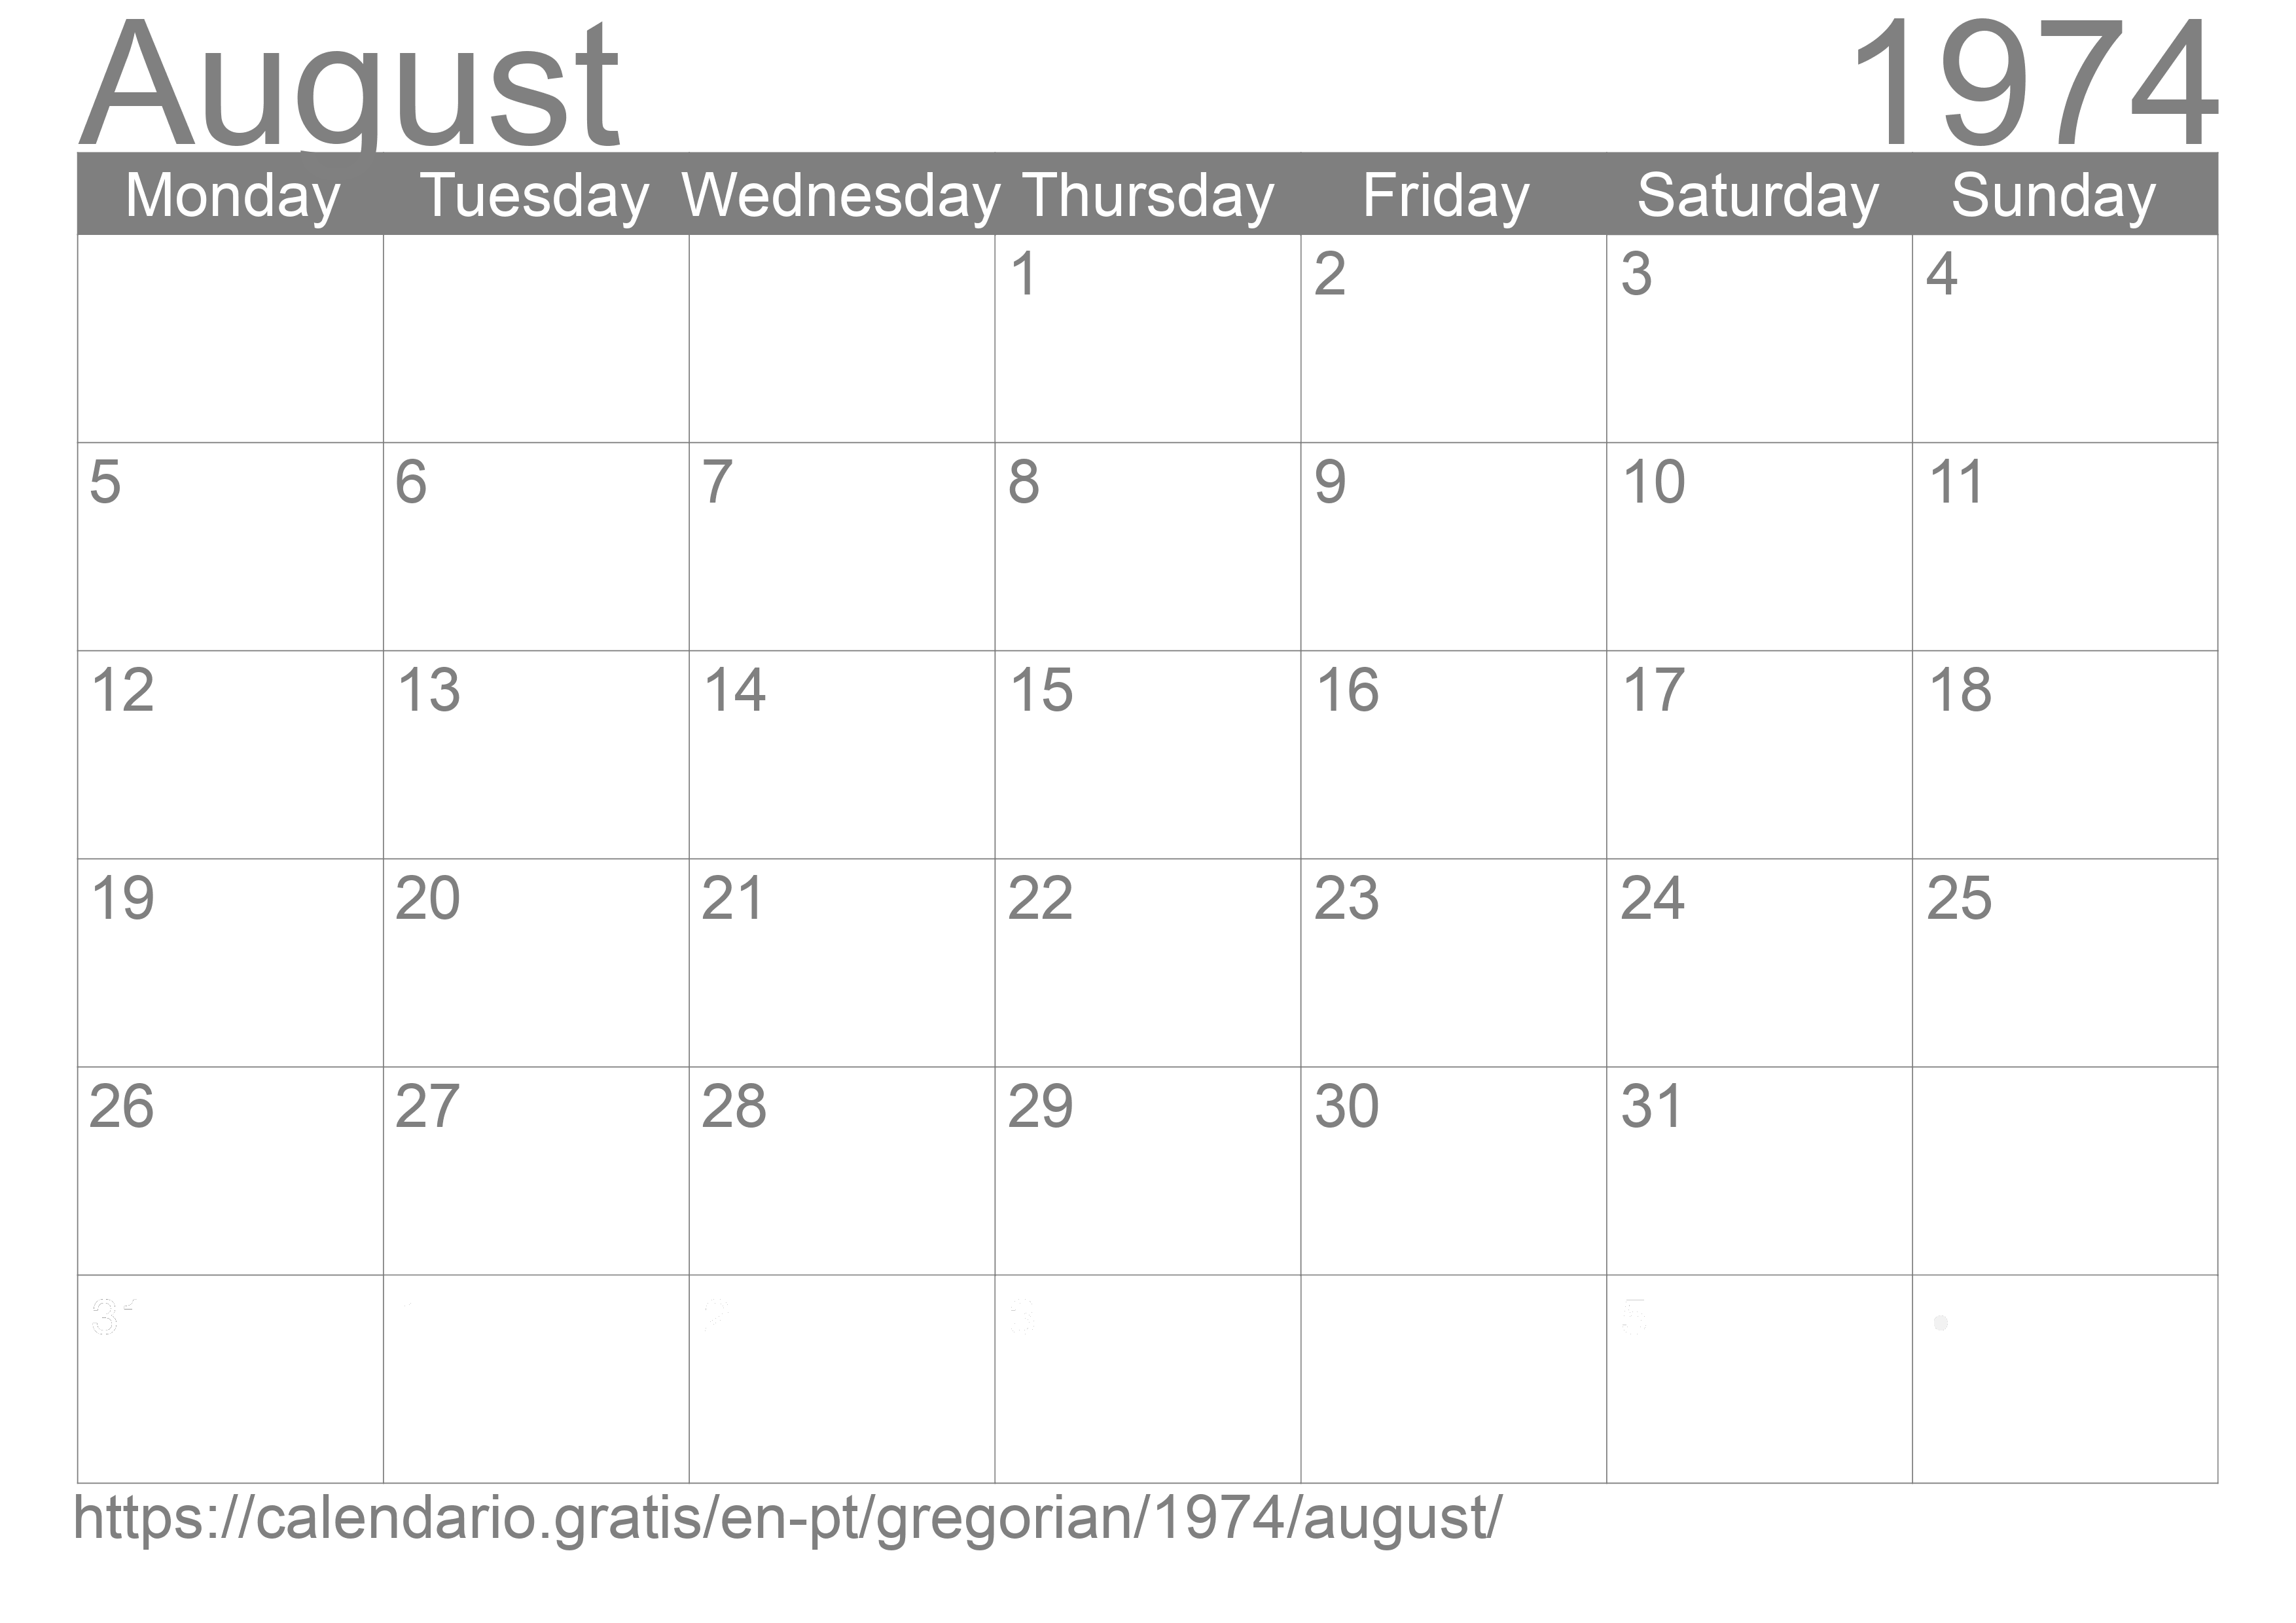 Calendar August 1974 to print